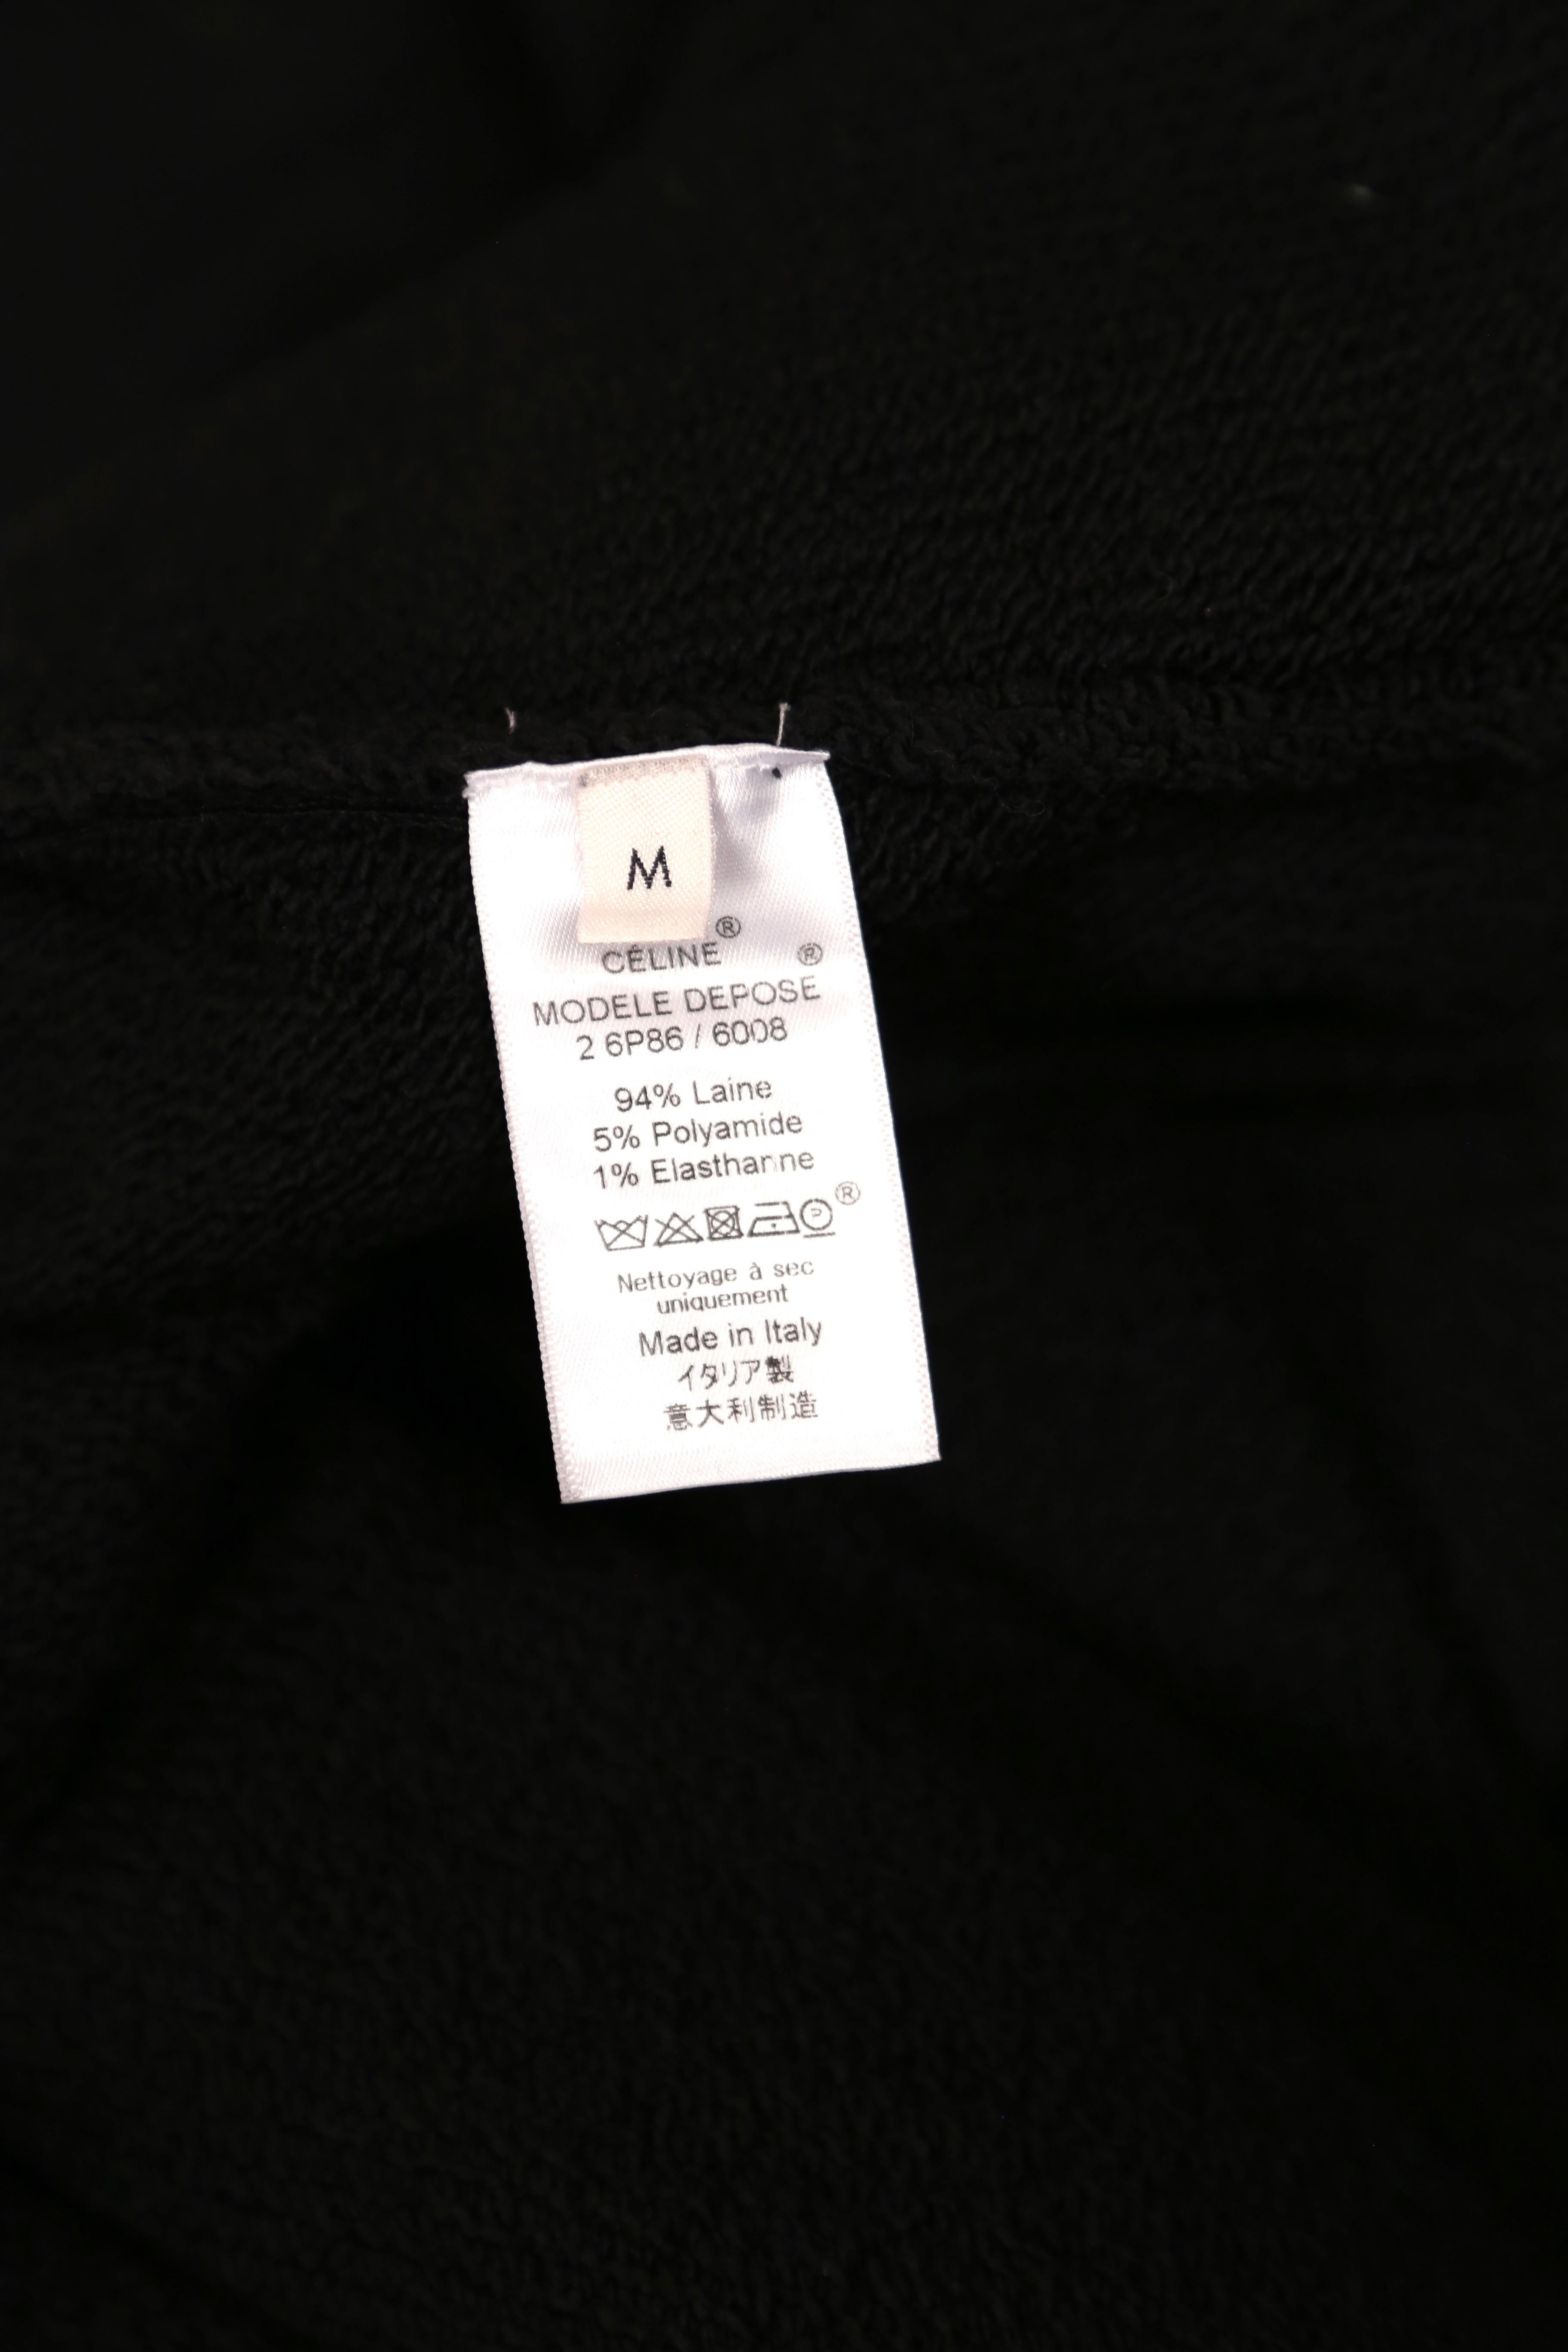 Black CELINE by PHOEBE PHILO 'Joan Didion' long black ad campaign dress